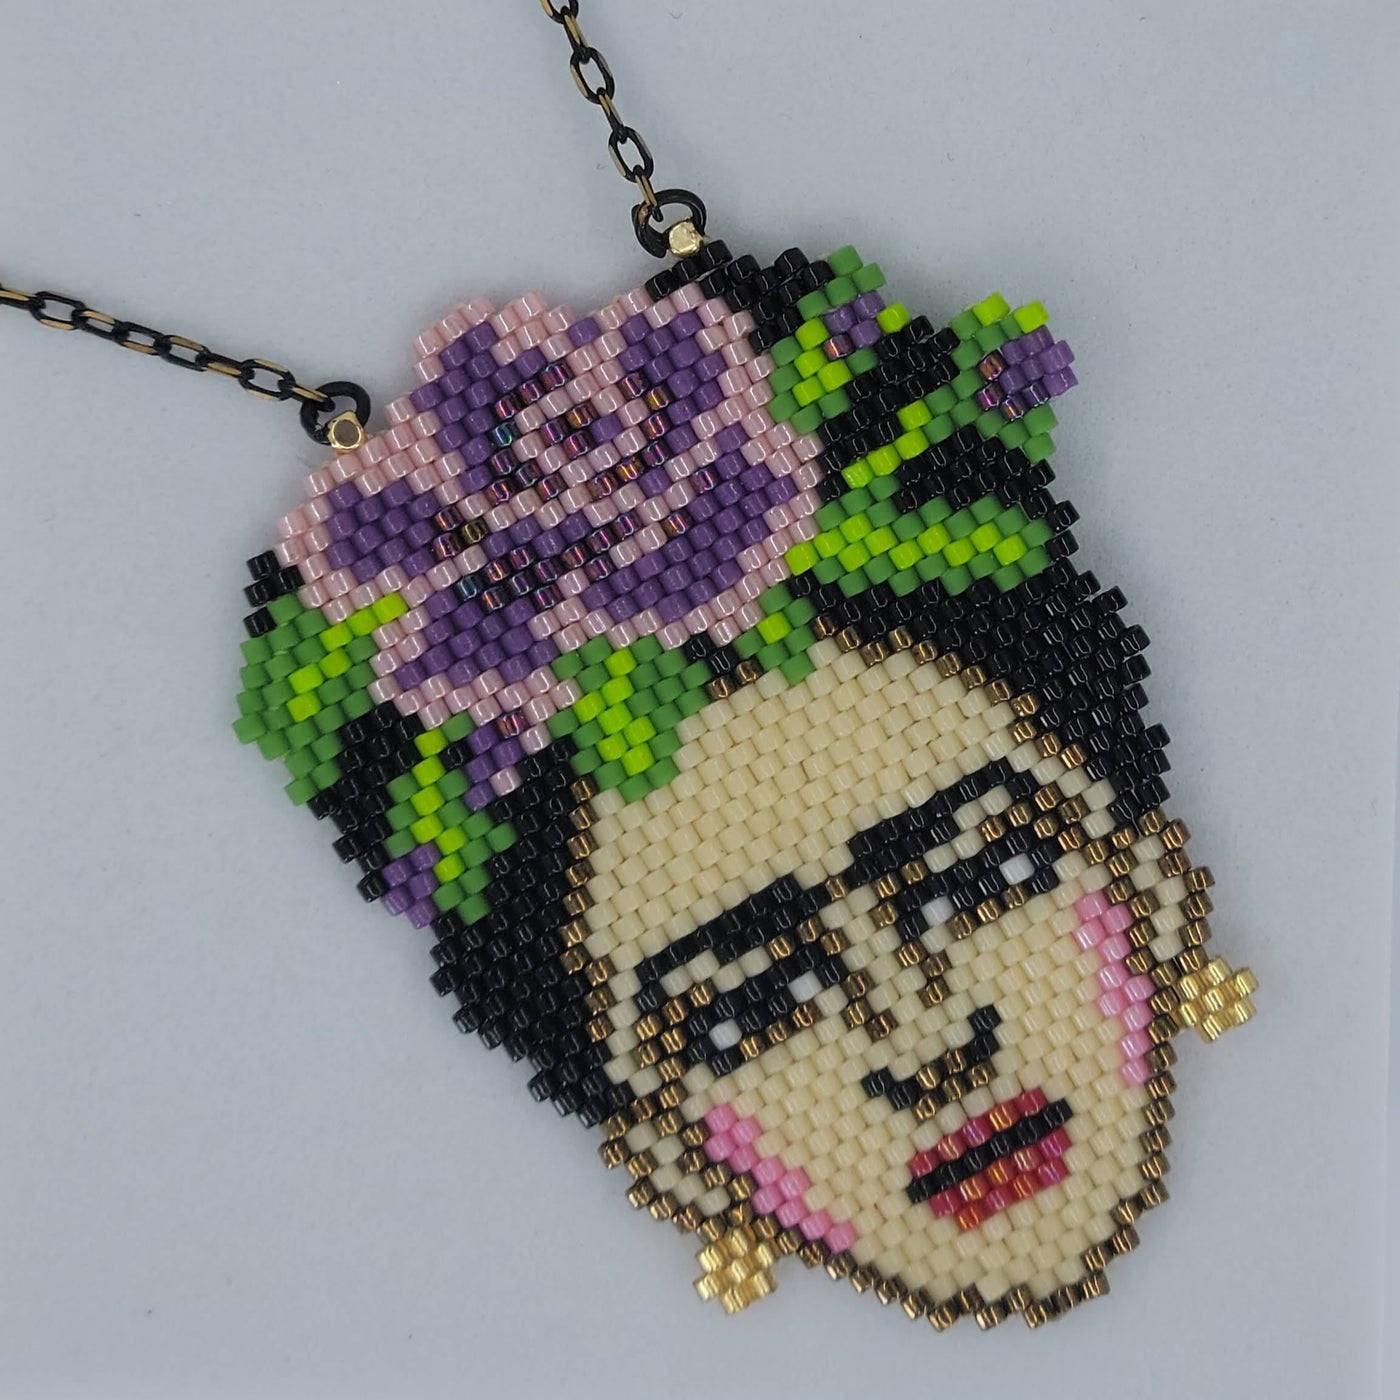 Frida Kahlo Necklace with Purple Flower Headband